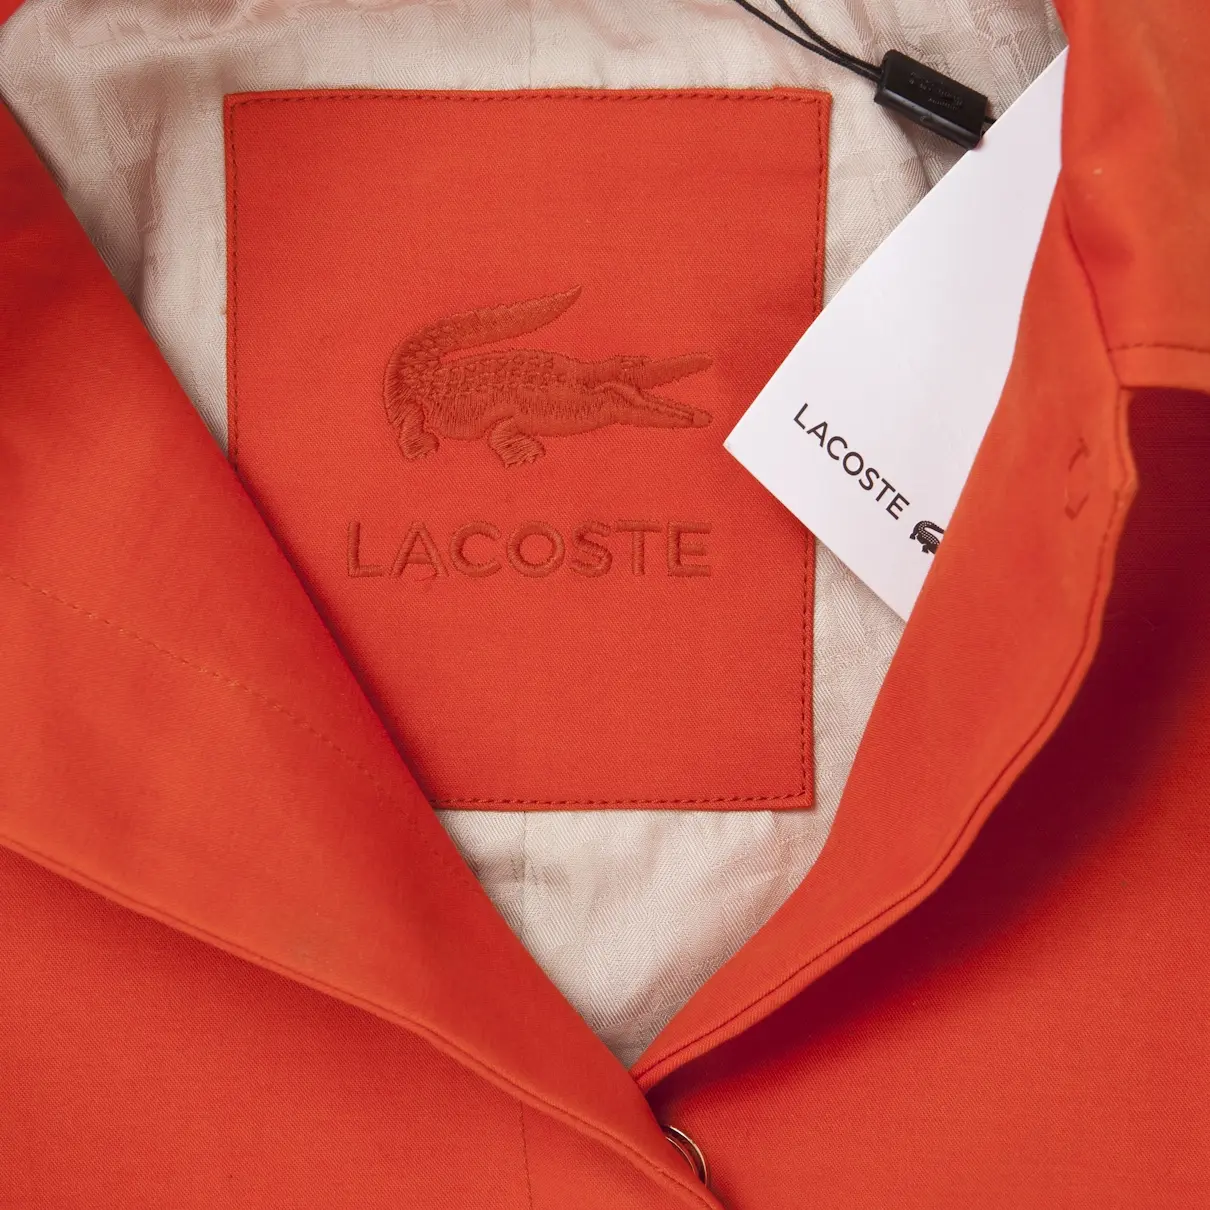 Buy Lacoste Parka online